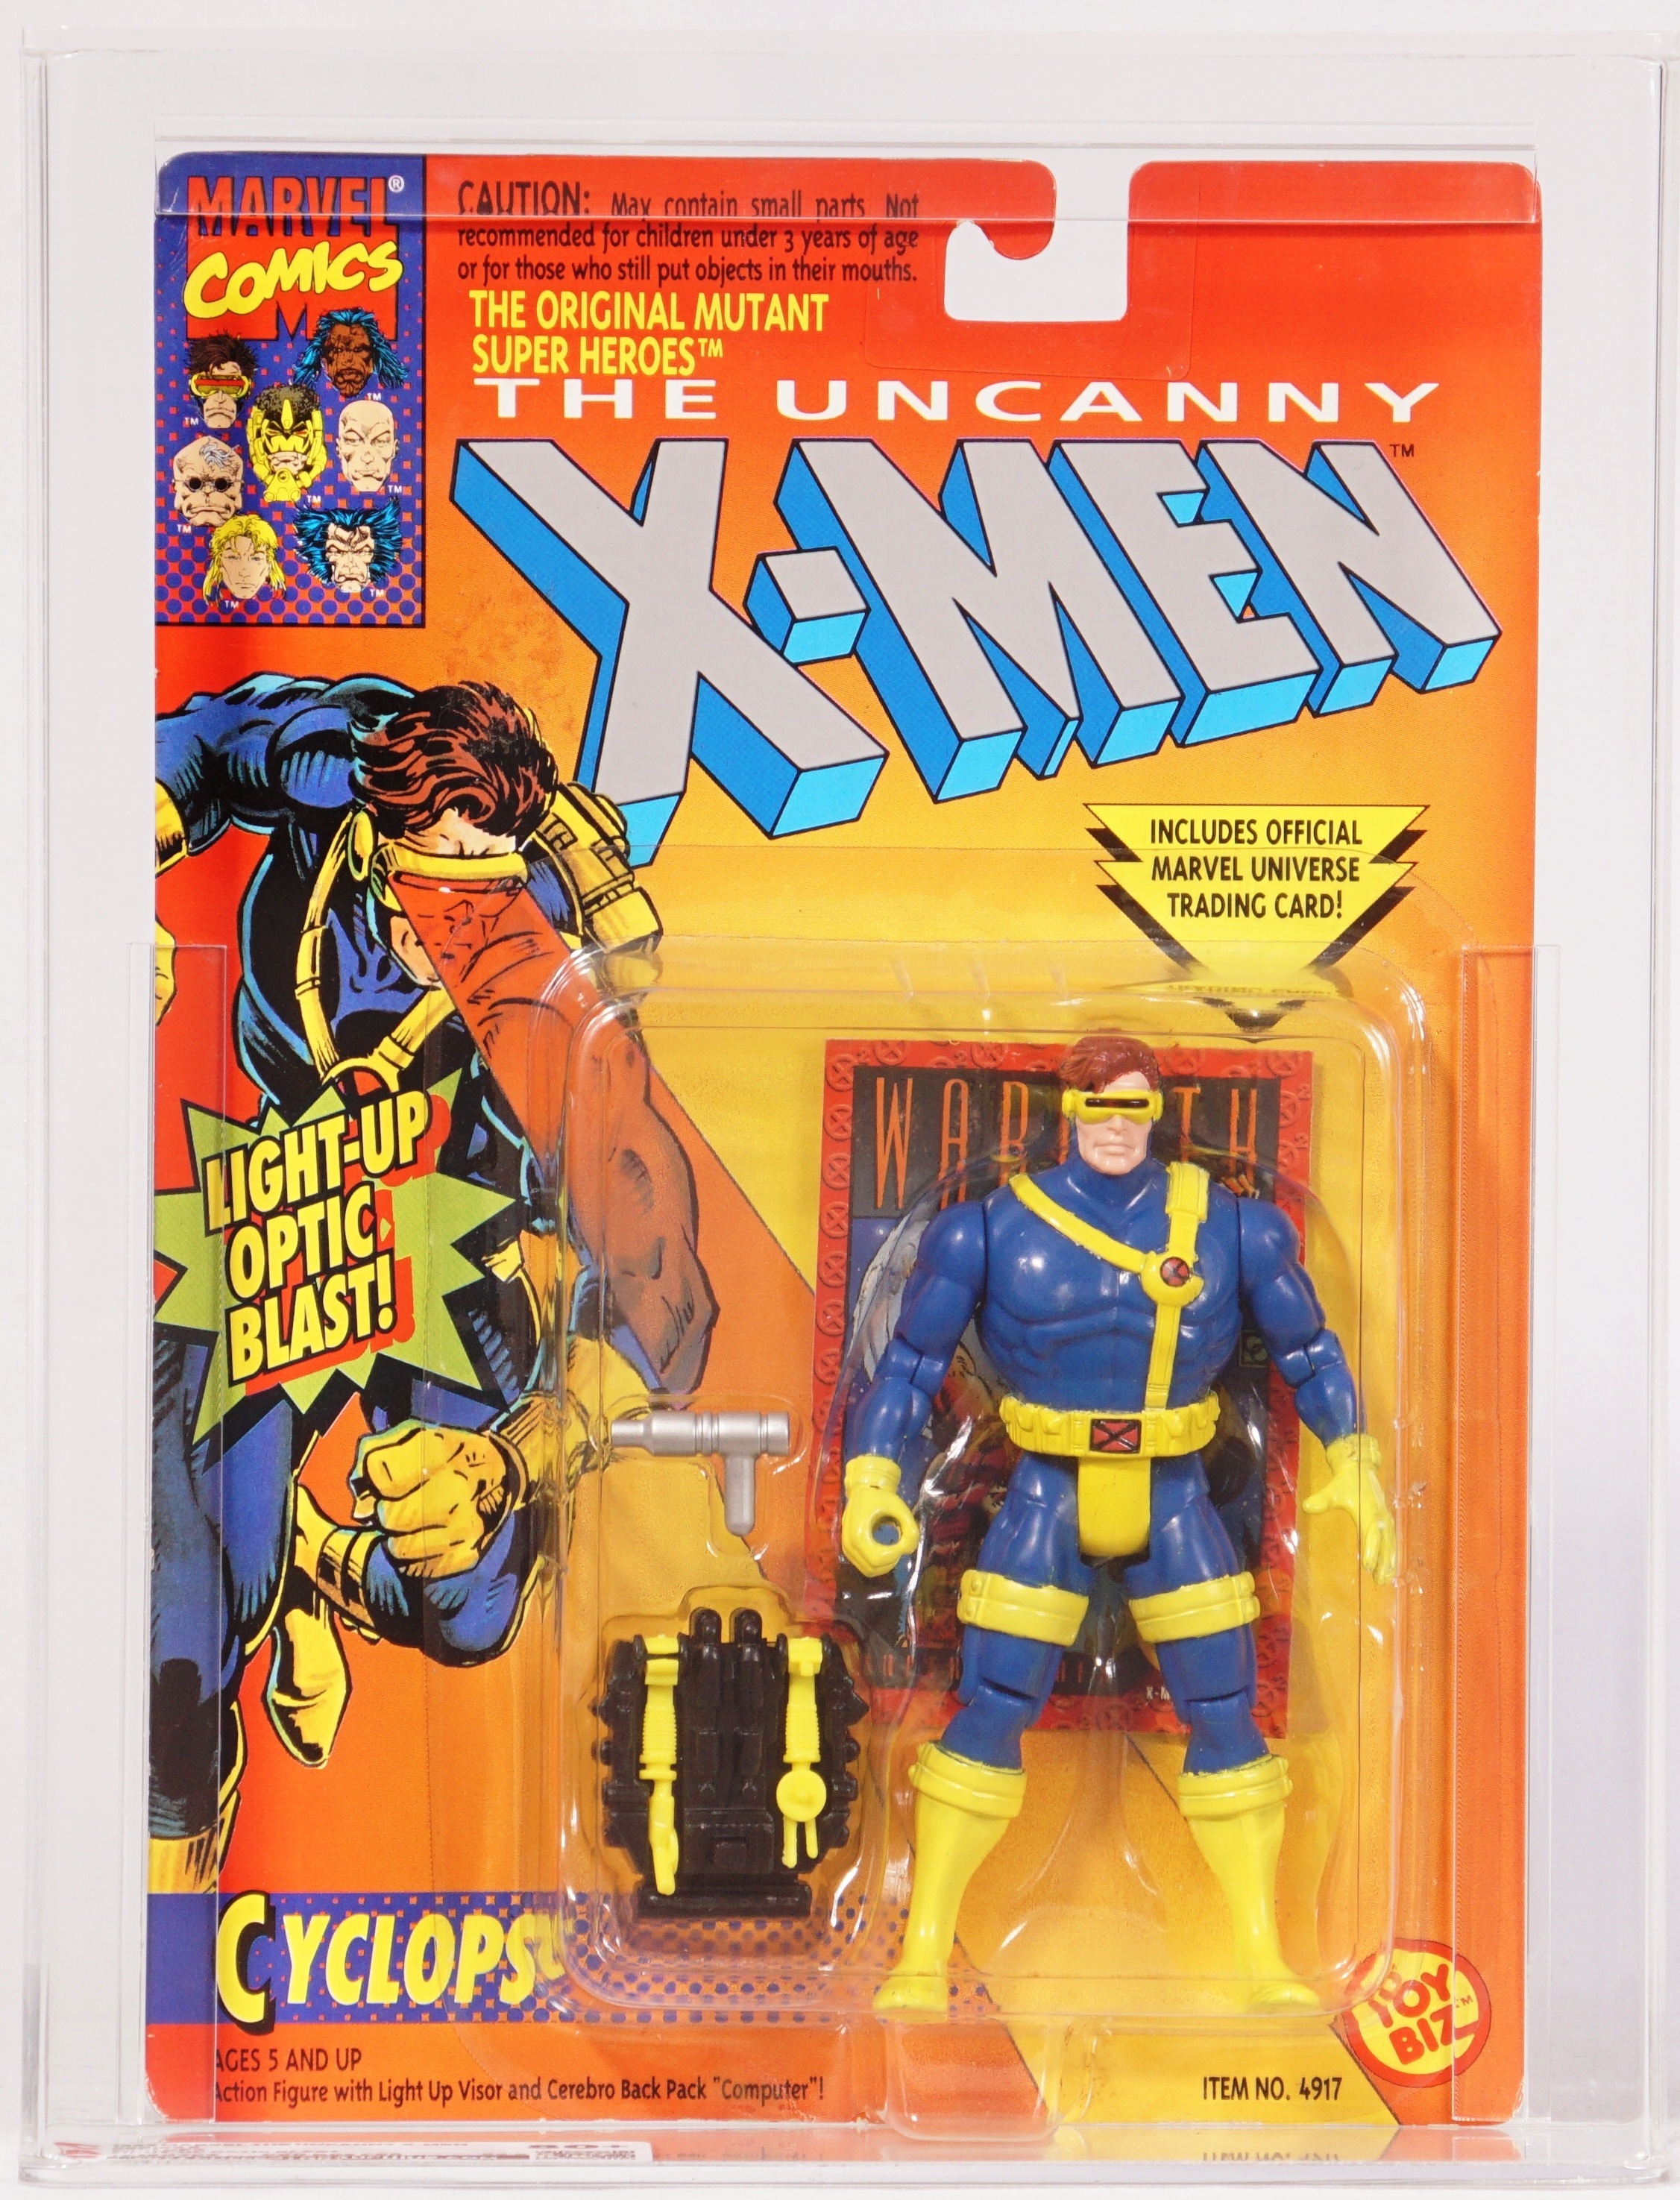 1993 Marvel Comics The Uncanny X-Men Carded Action Figure - Cyclops